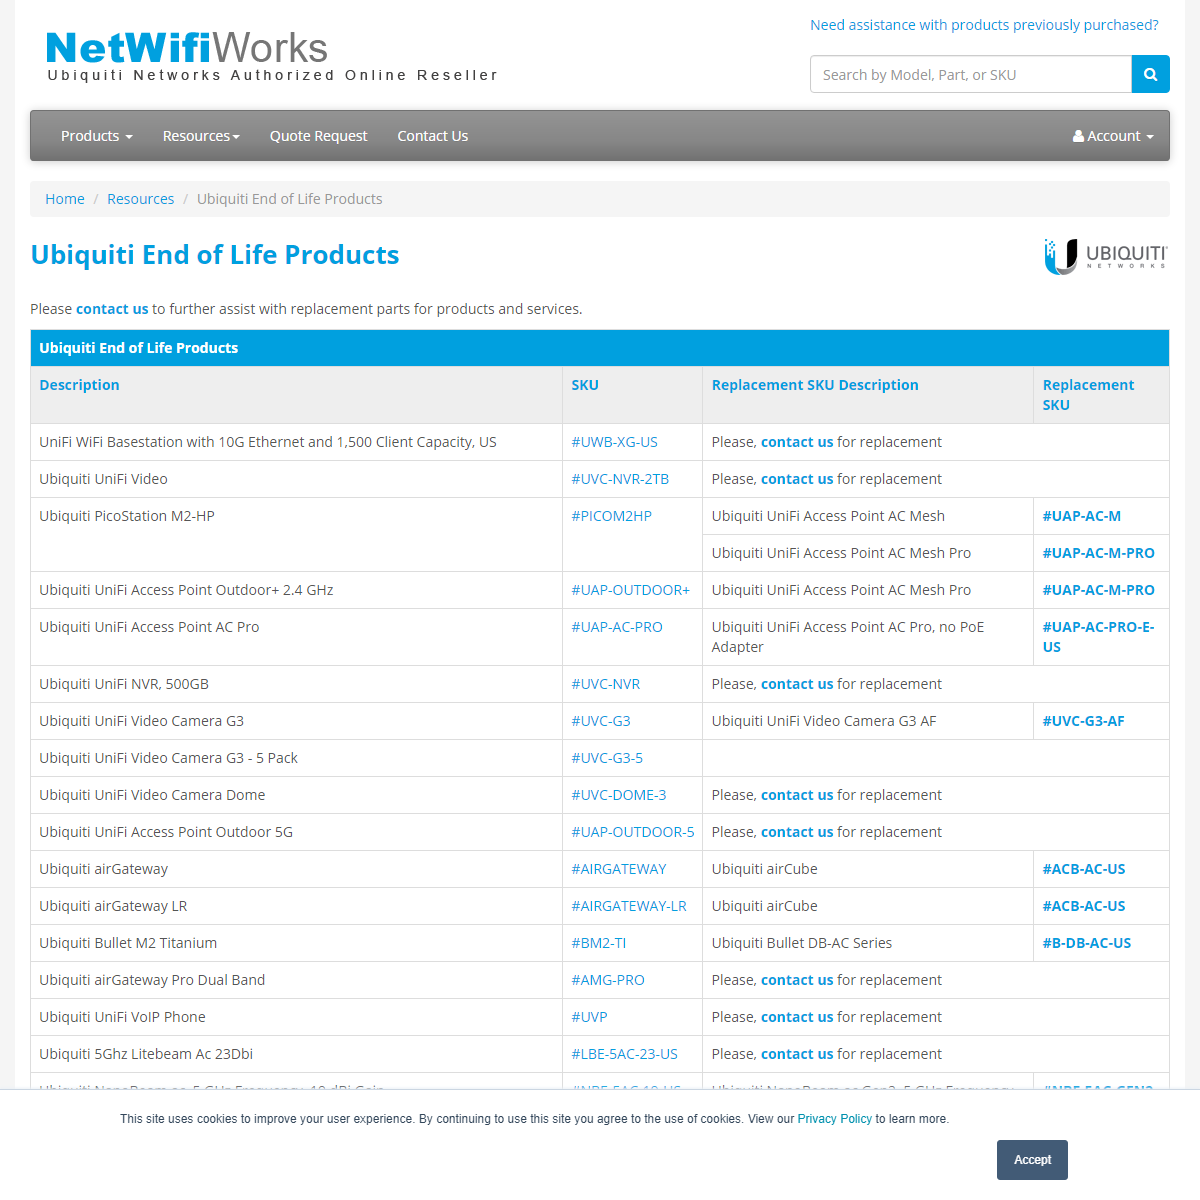 A complete backup of https://www.netwifiworks.com/Ubiquiti-EOL.asp